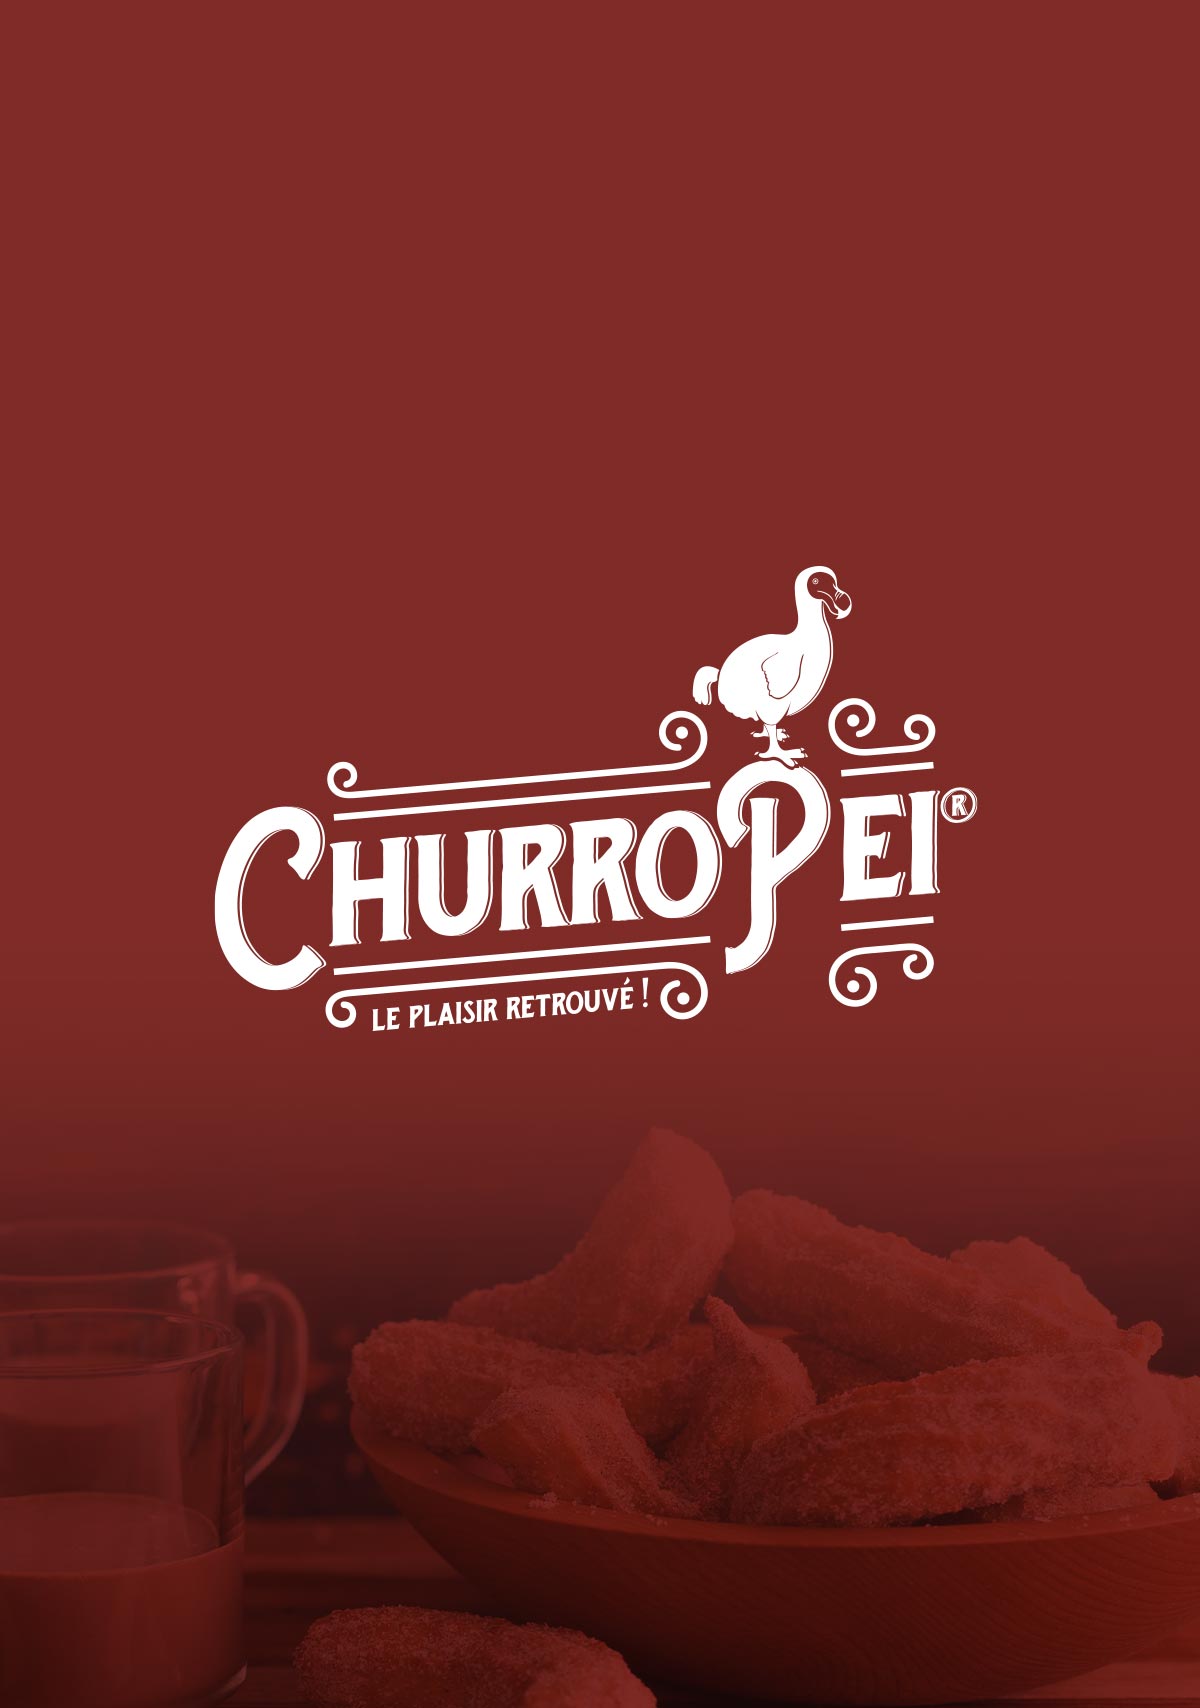 churropei logo